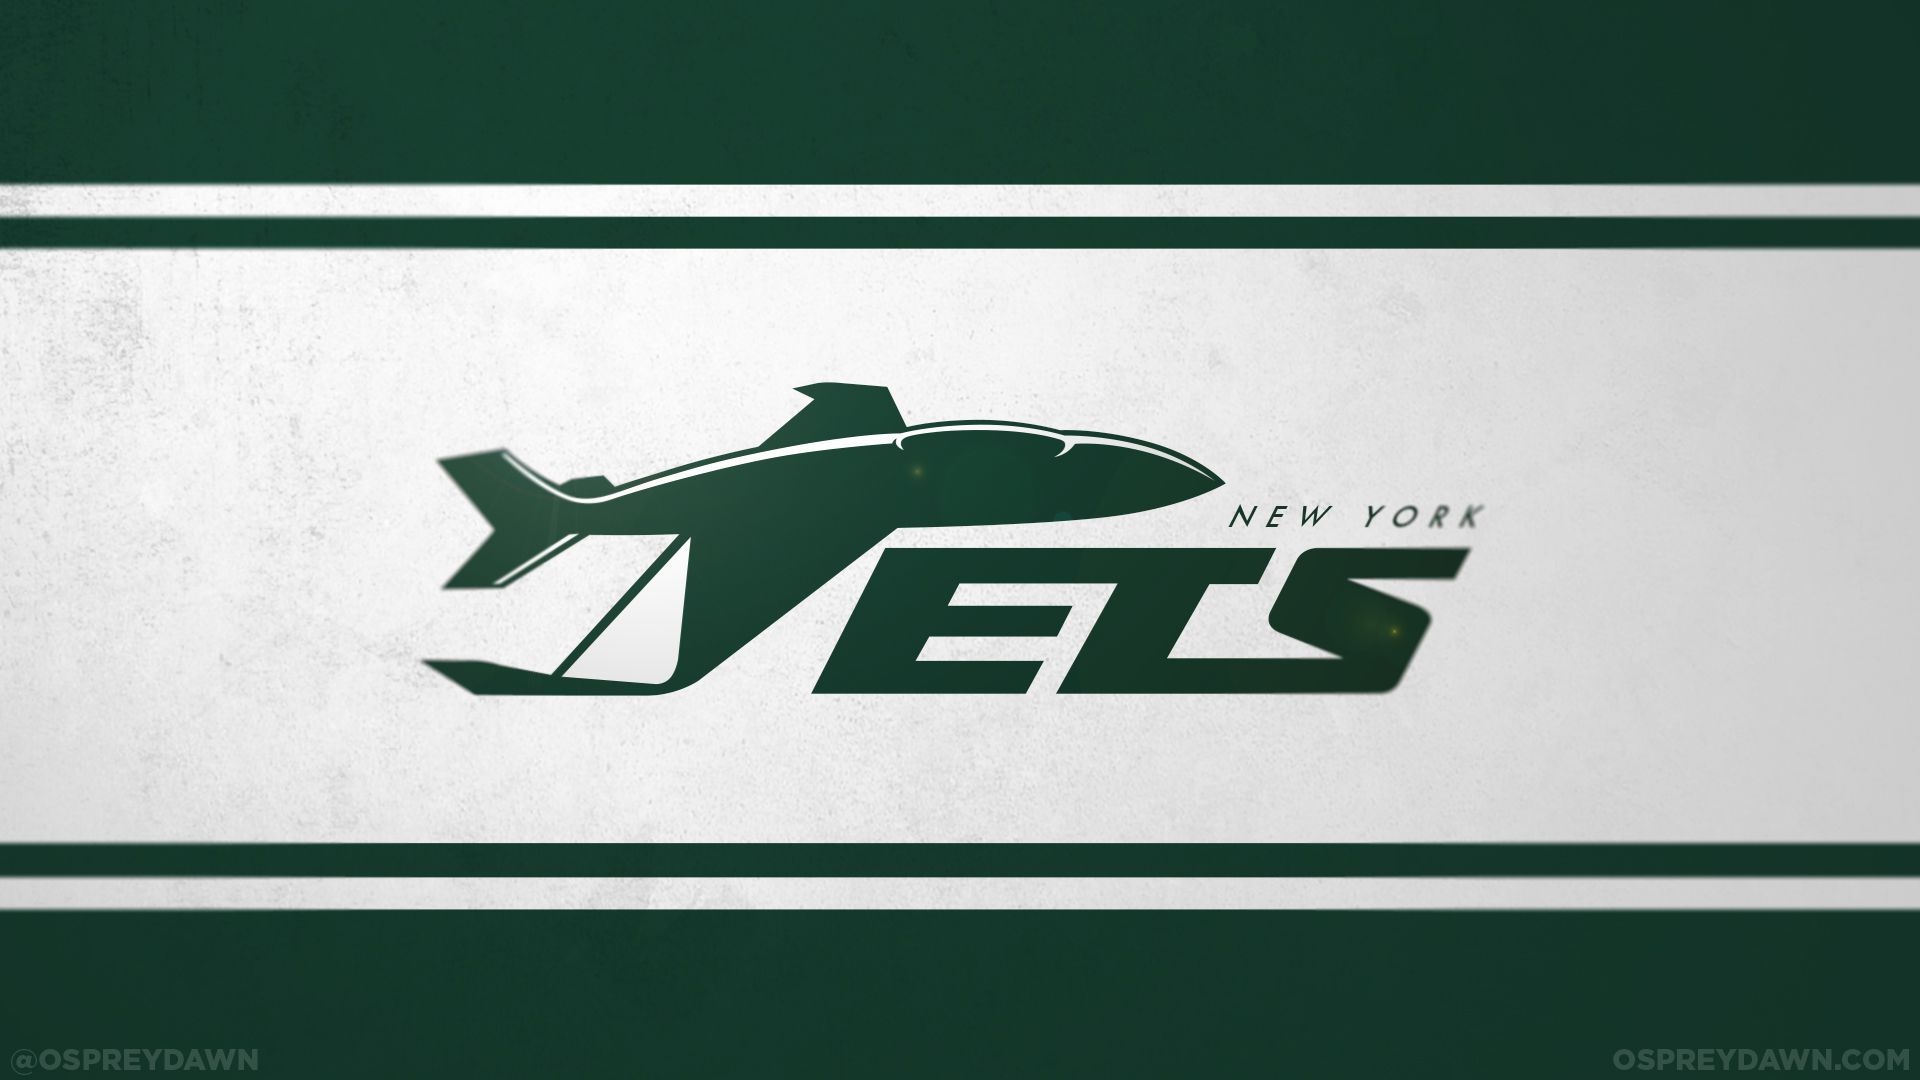 New York Jets wallpaper 1920x1080